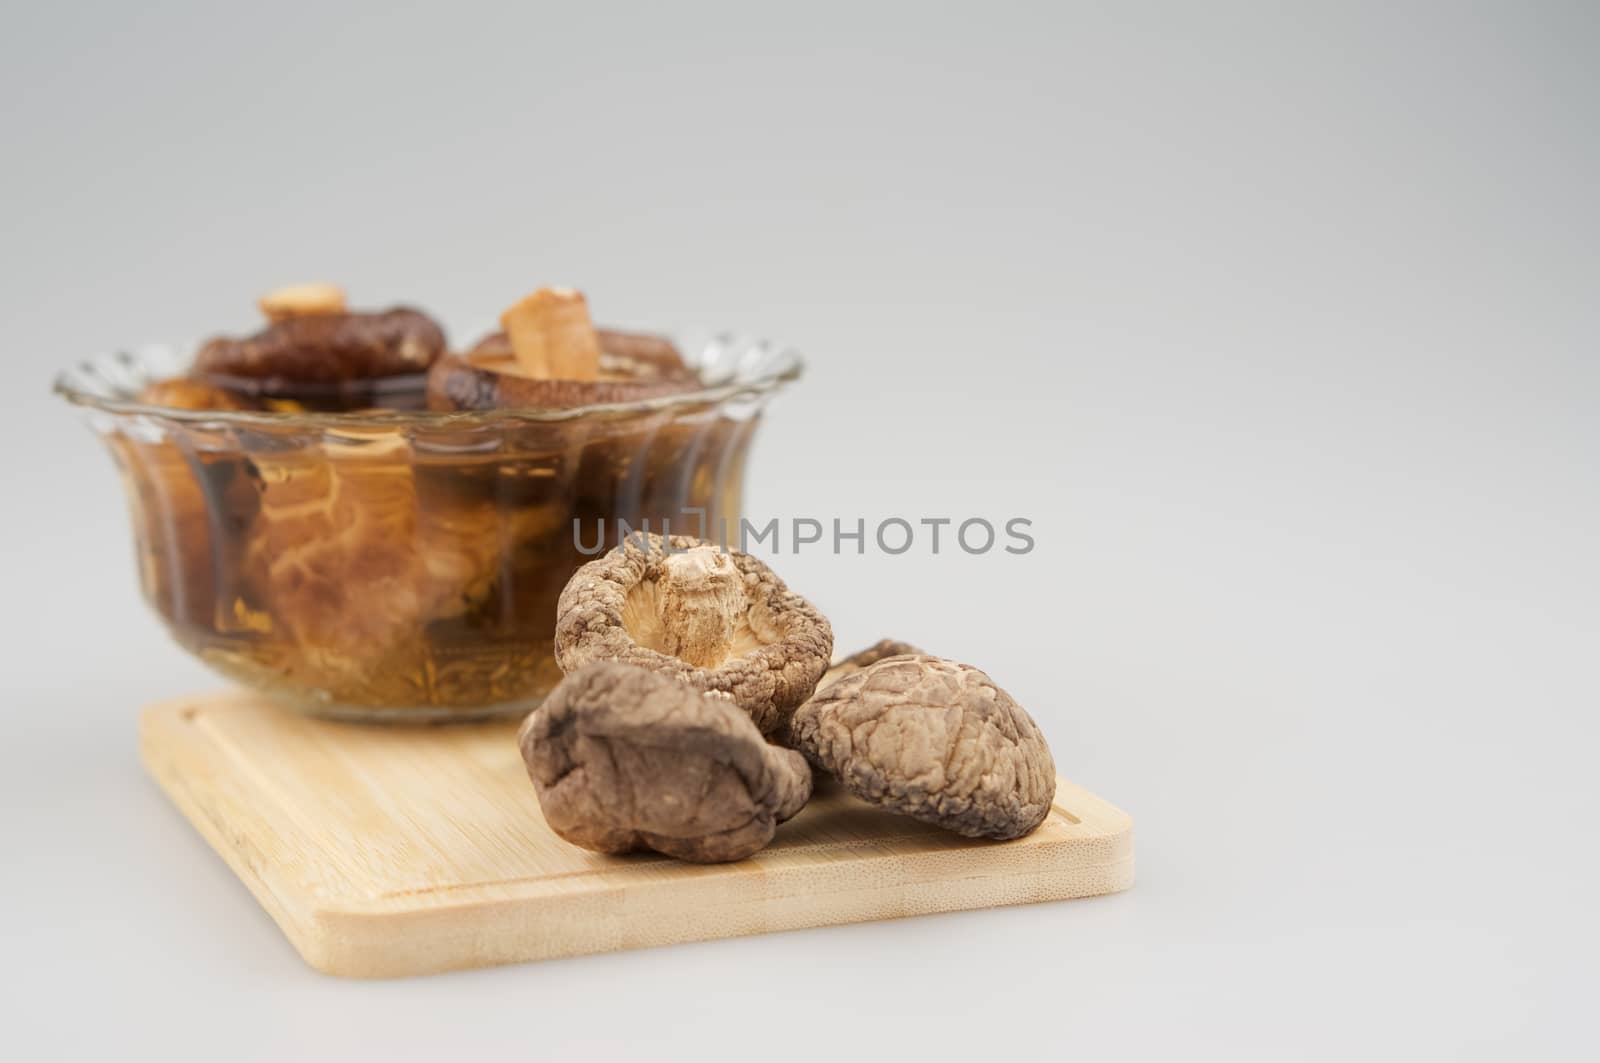 Dry Shitake mushroom or lentnus edodes place on chopping board have blur mushroom soak in glass cup by ninun